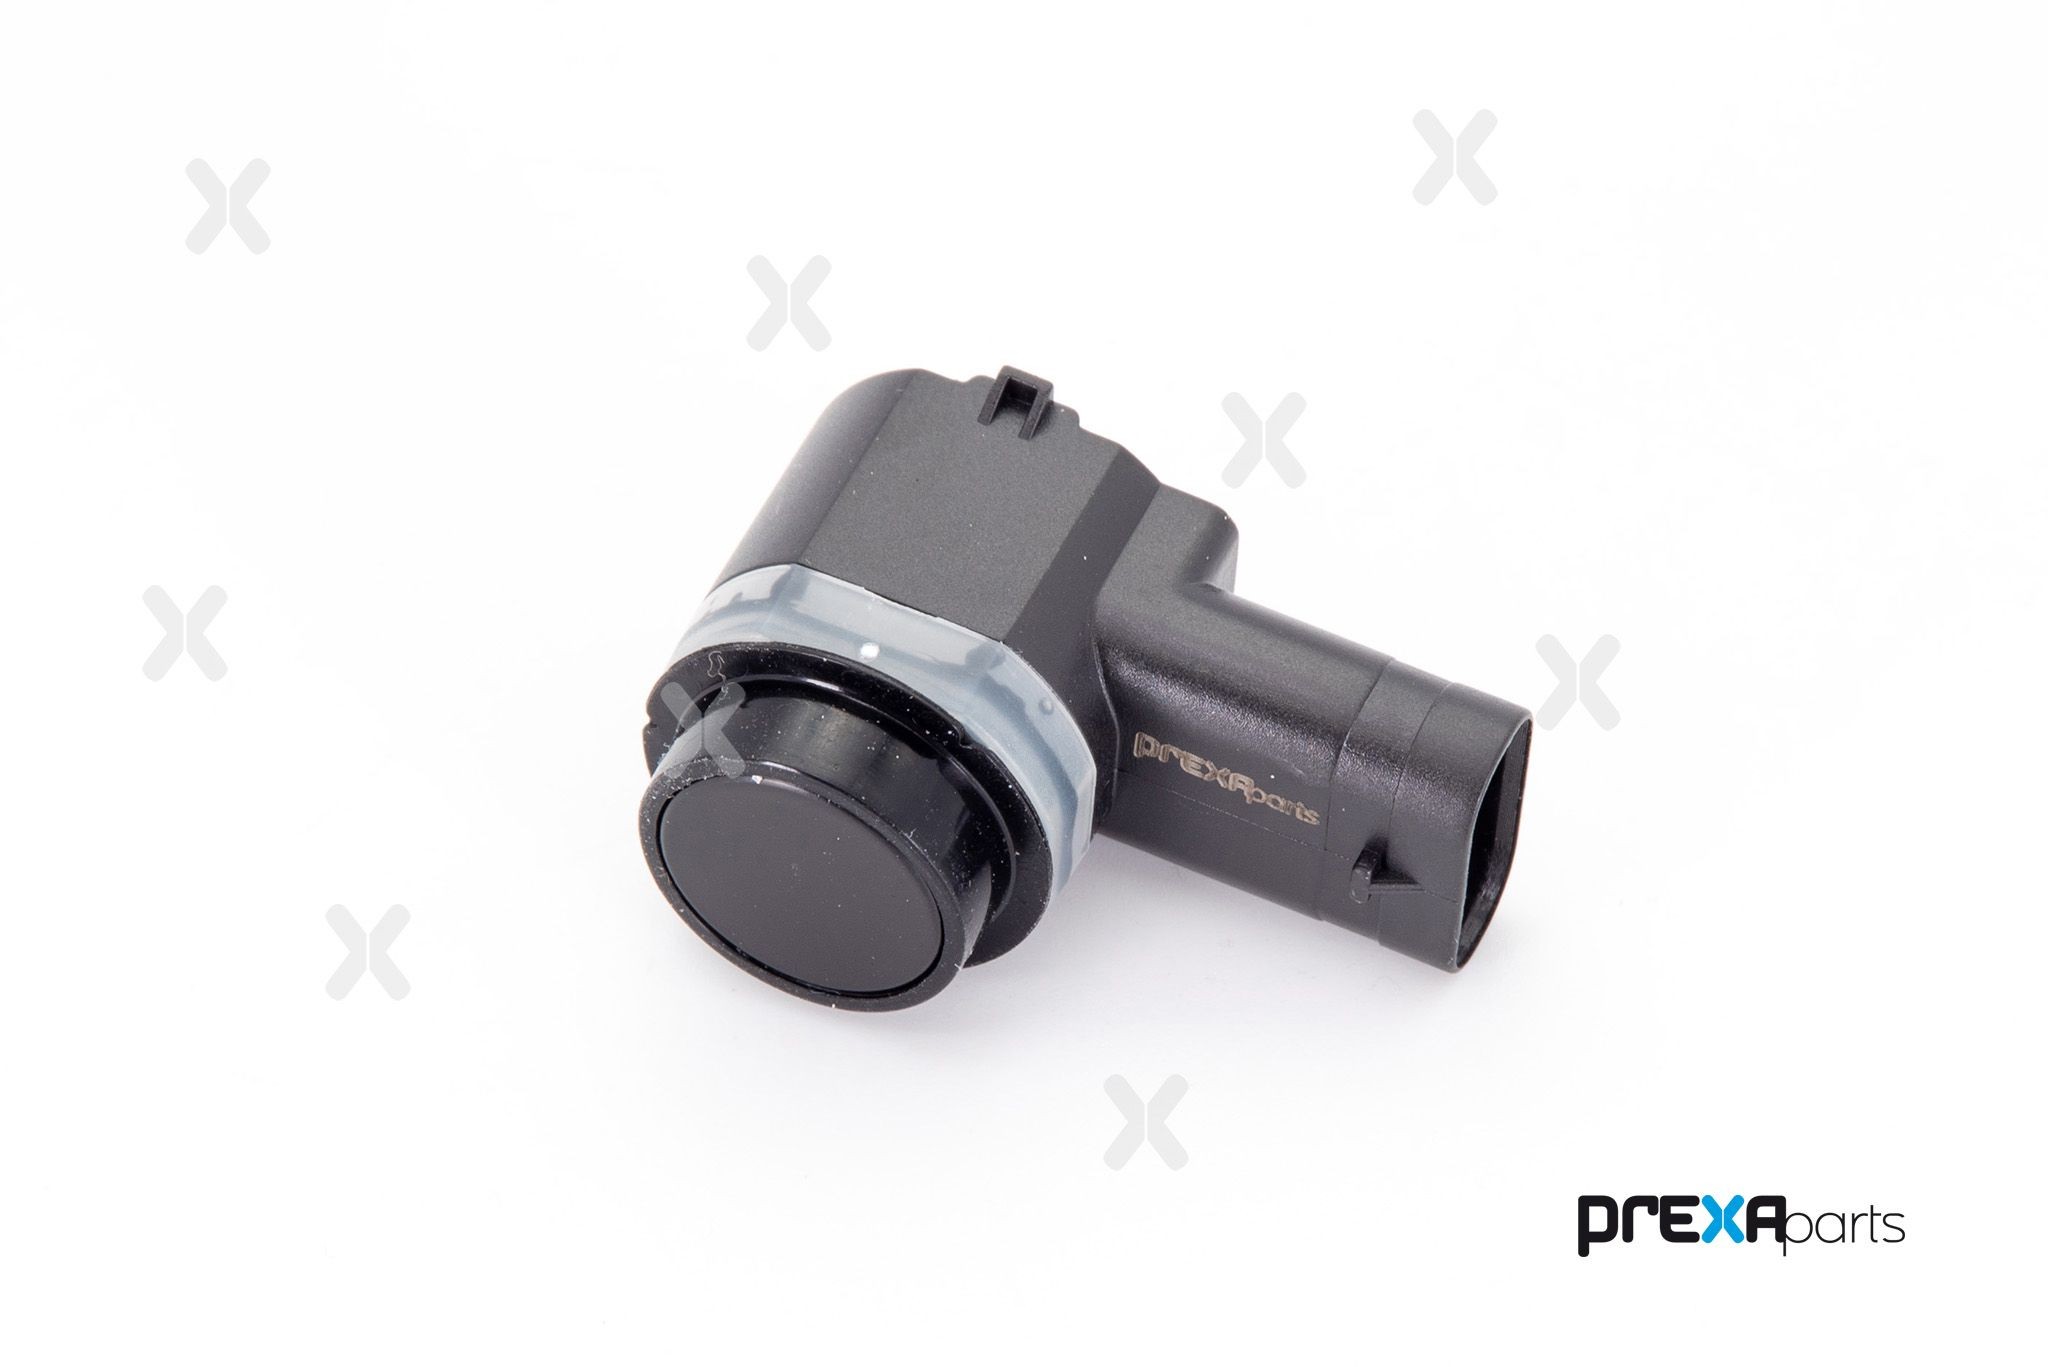 PREXAparts P603008 Parking sensor LR005076